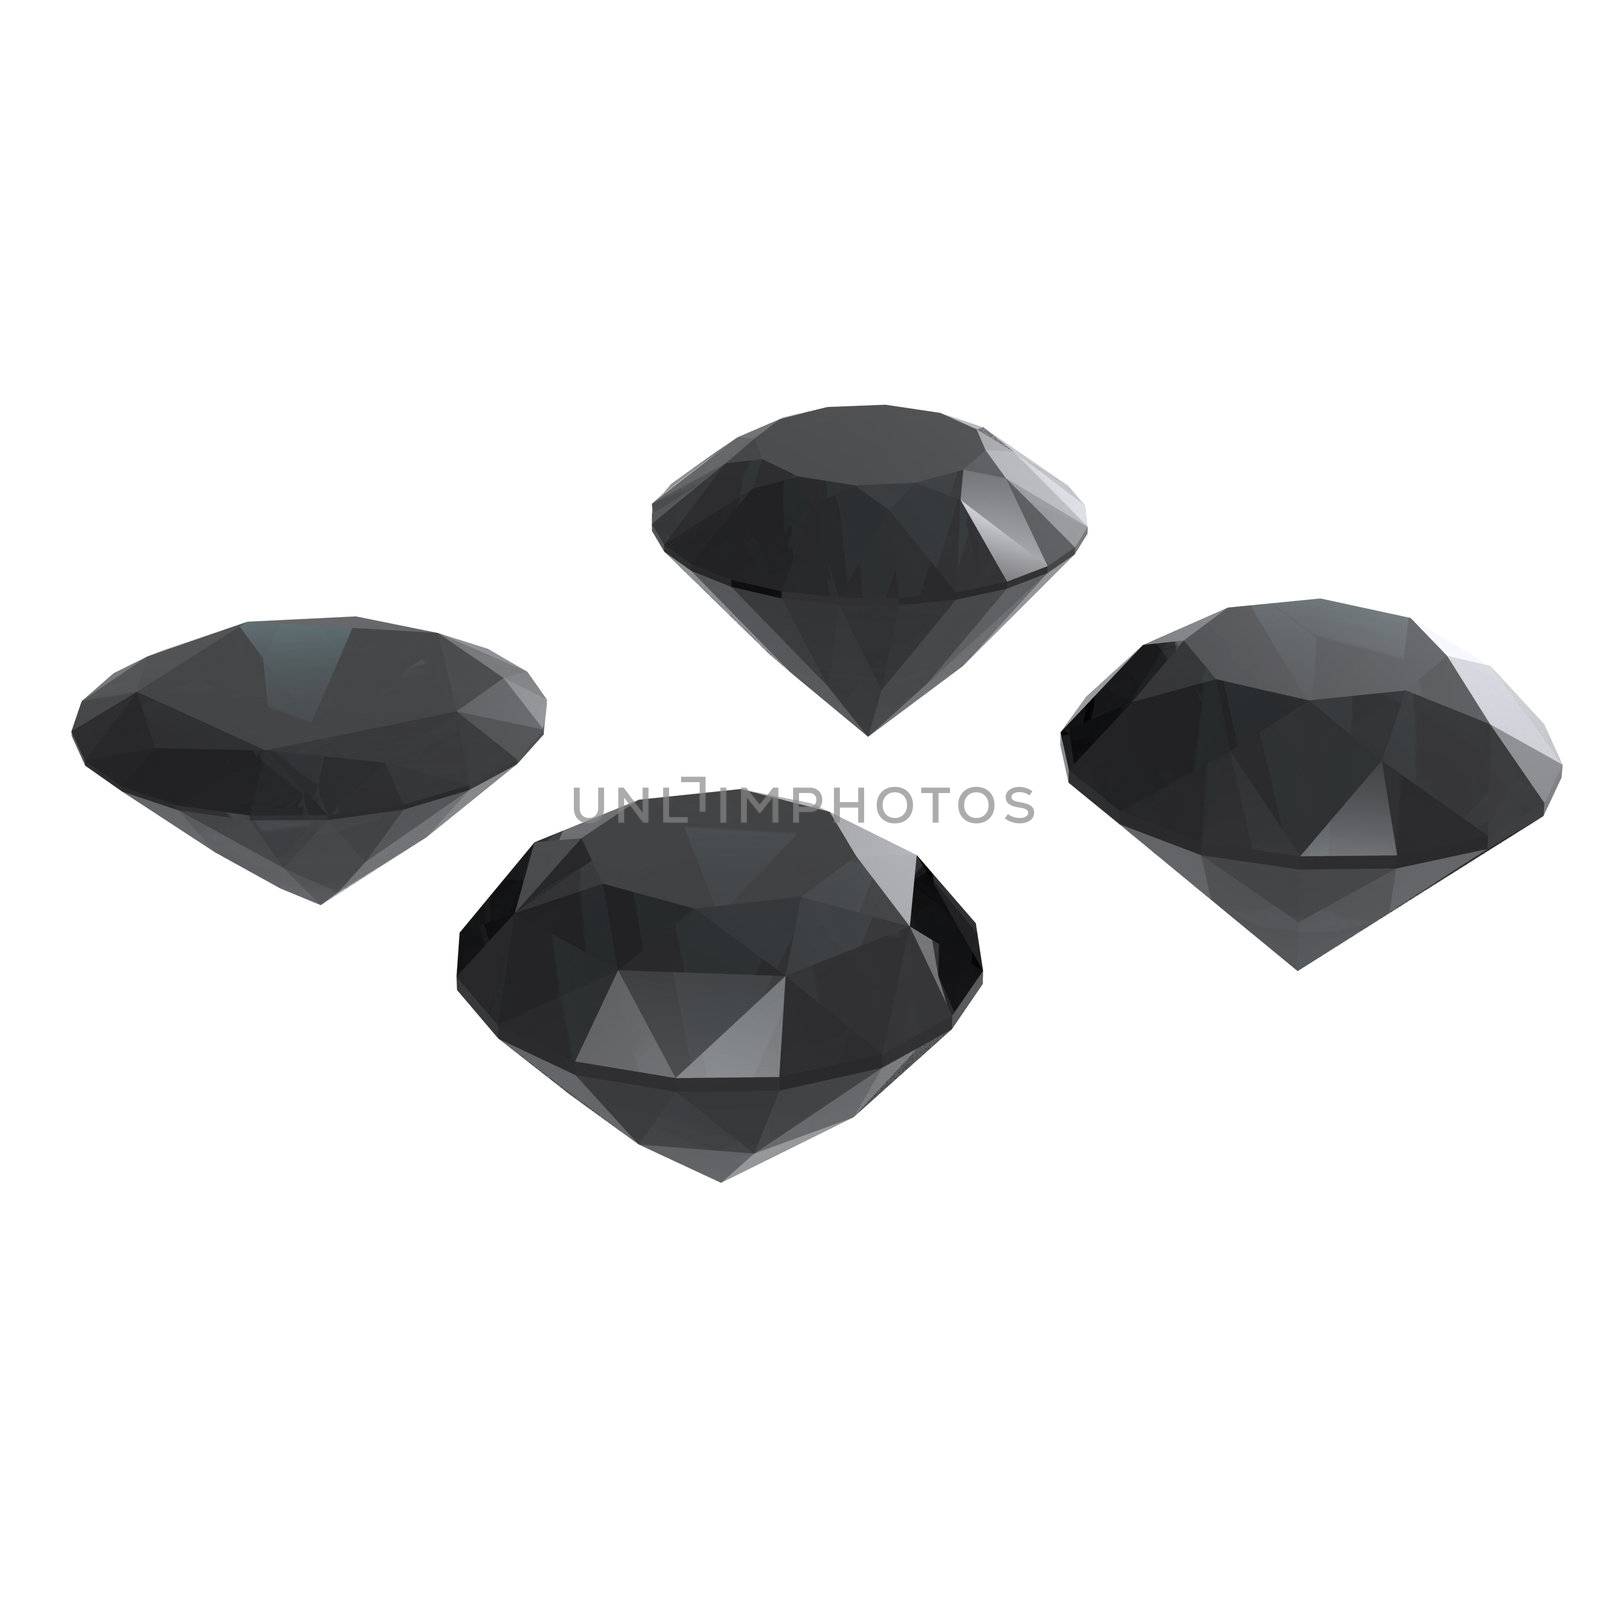 Round black sapphire isolated on white background. Gemstone